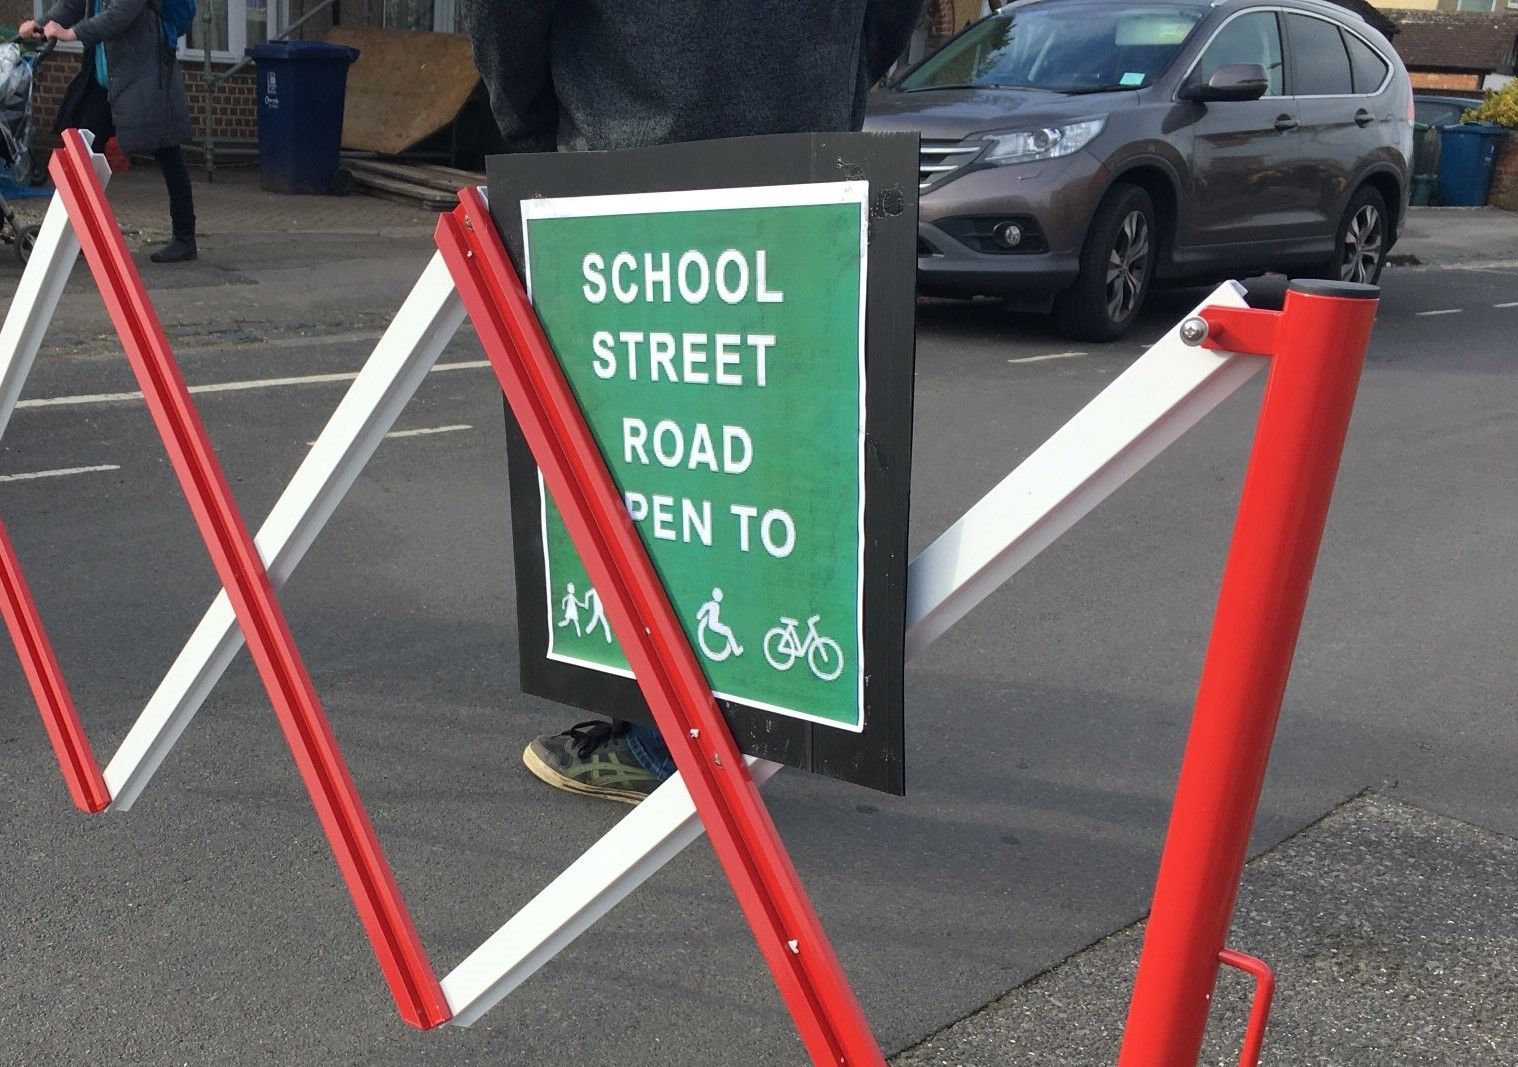 Headington School Street scheme extended after successful pilot